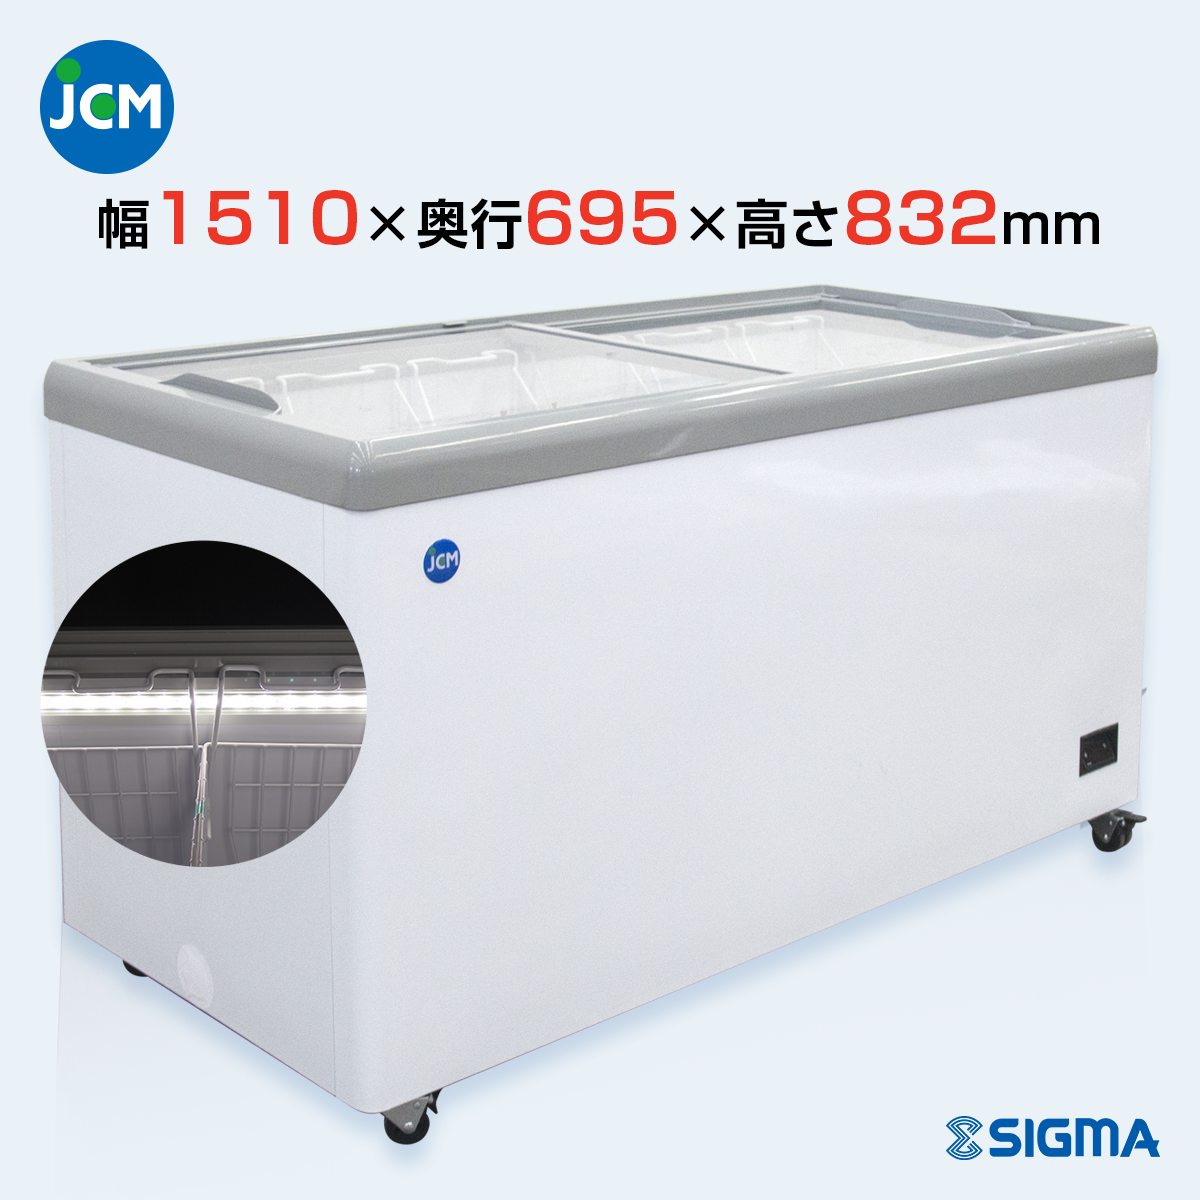 JCMCS-373FL 冷凍ショーケース 庫内LED付タイプ ／幅1510×奥行695×高さ832mm